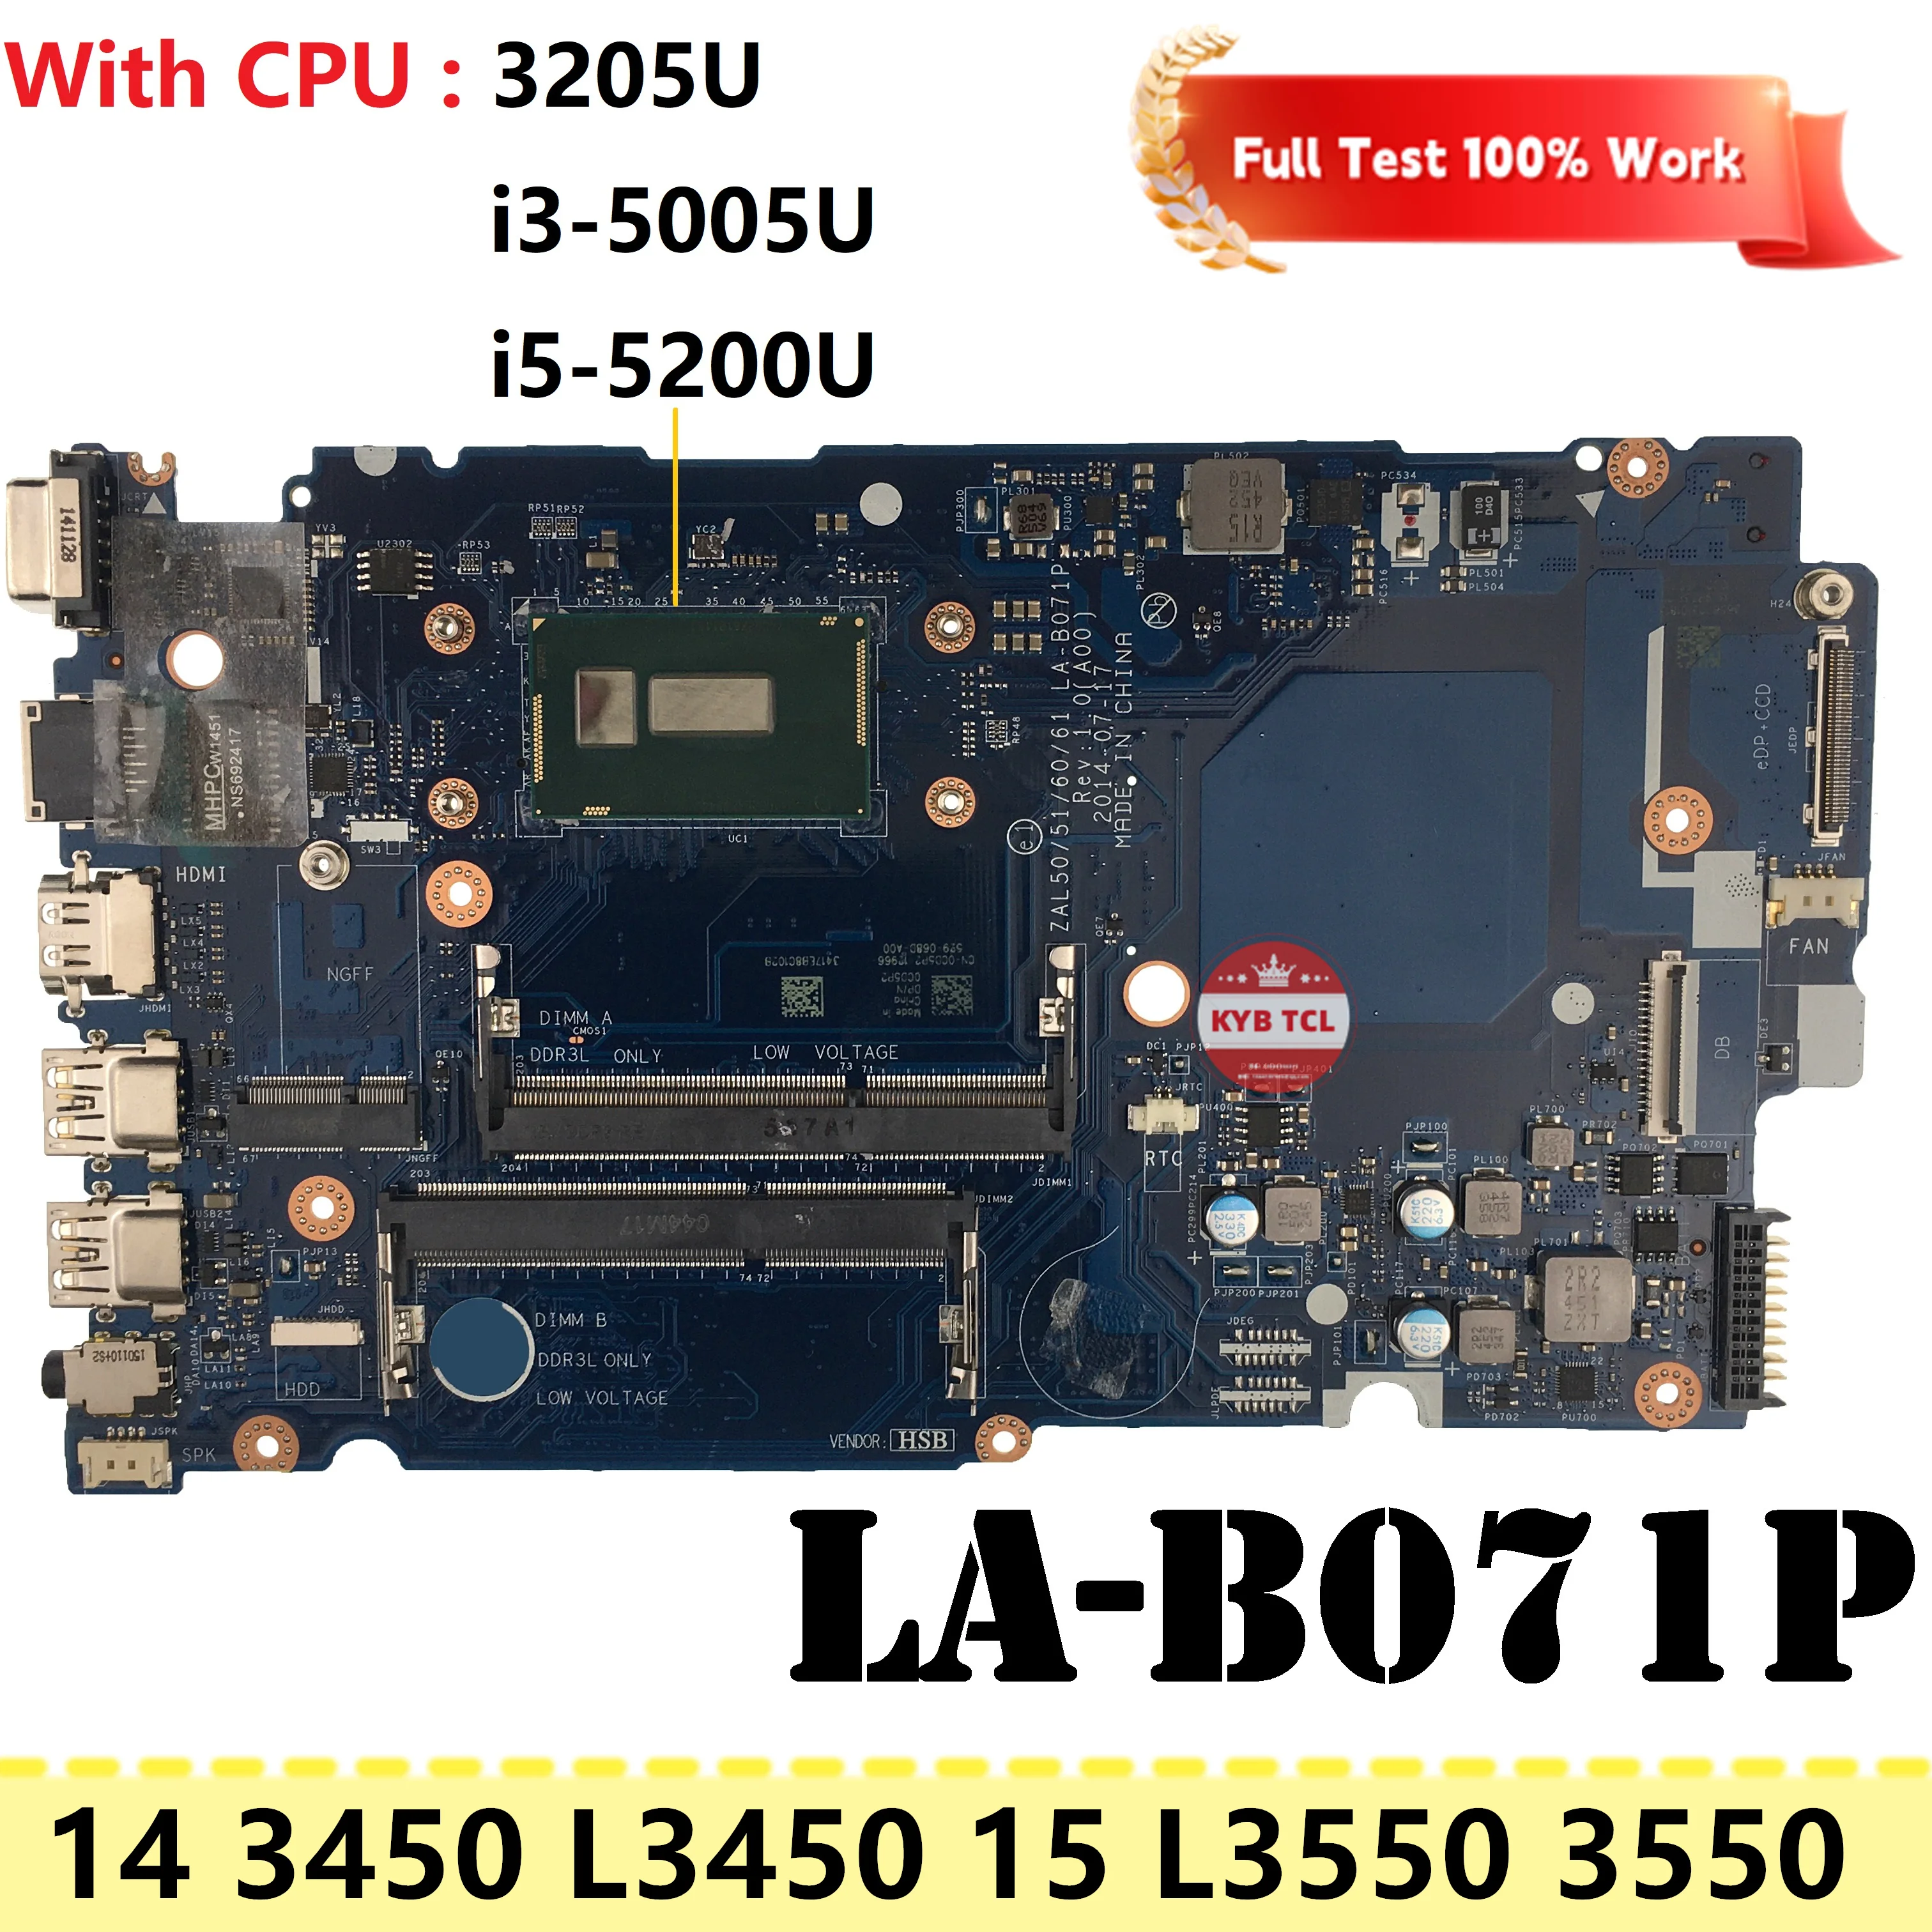 

For Dell Latitude 14 L3450 3450 15 L3550 3550 Laptop Motherboard LA-B071P Mainboard with 3205U I3-5005U I5 CPU YCX7C G3WP7 68RW5